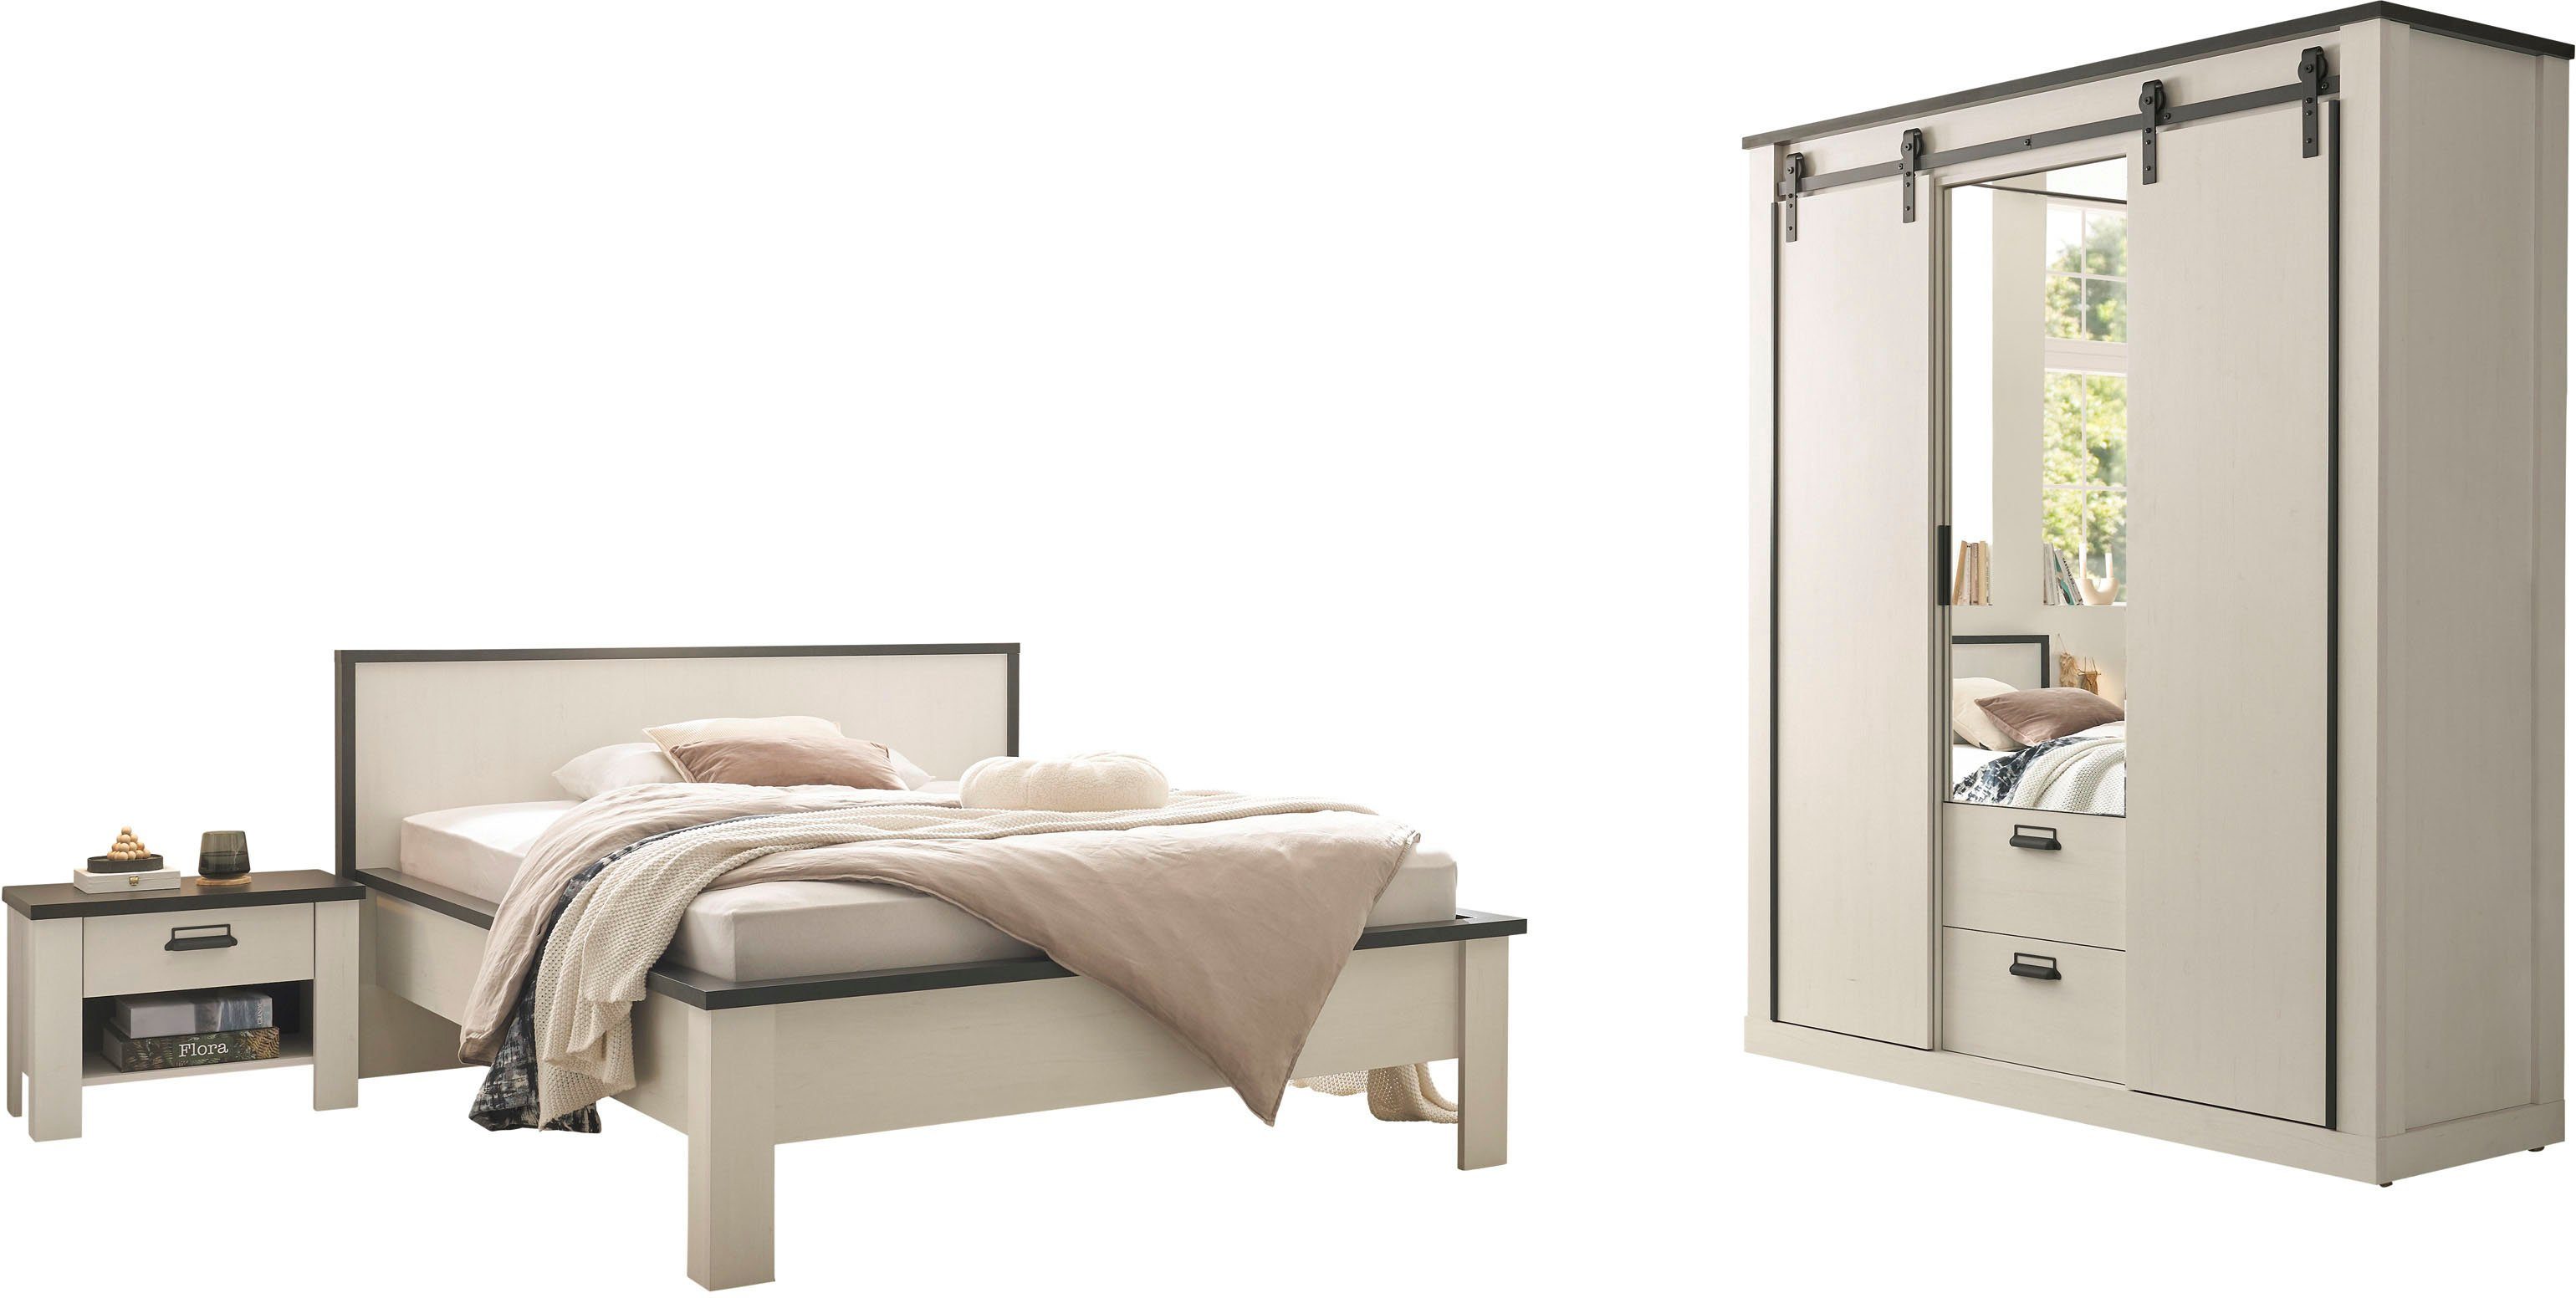 home affaire slaapkamerserie sherwood ligoppervlak 140 x 200 cm, kast 3-deurs 162 cm breed (4-delig) wit